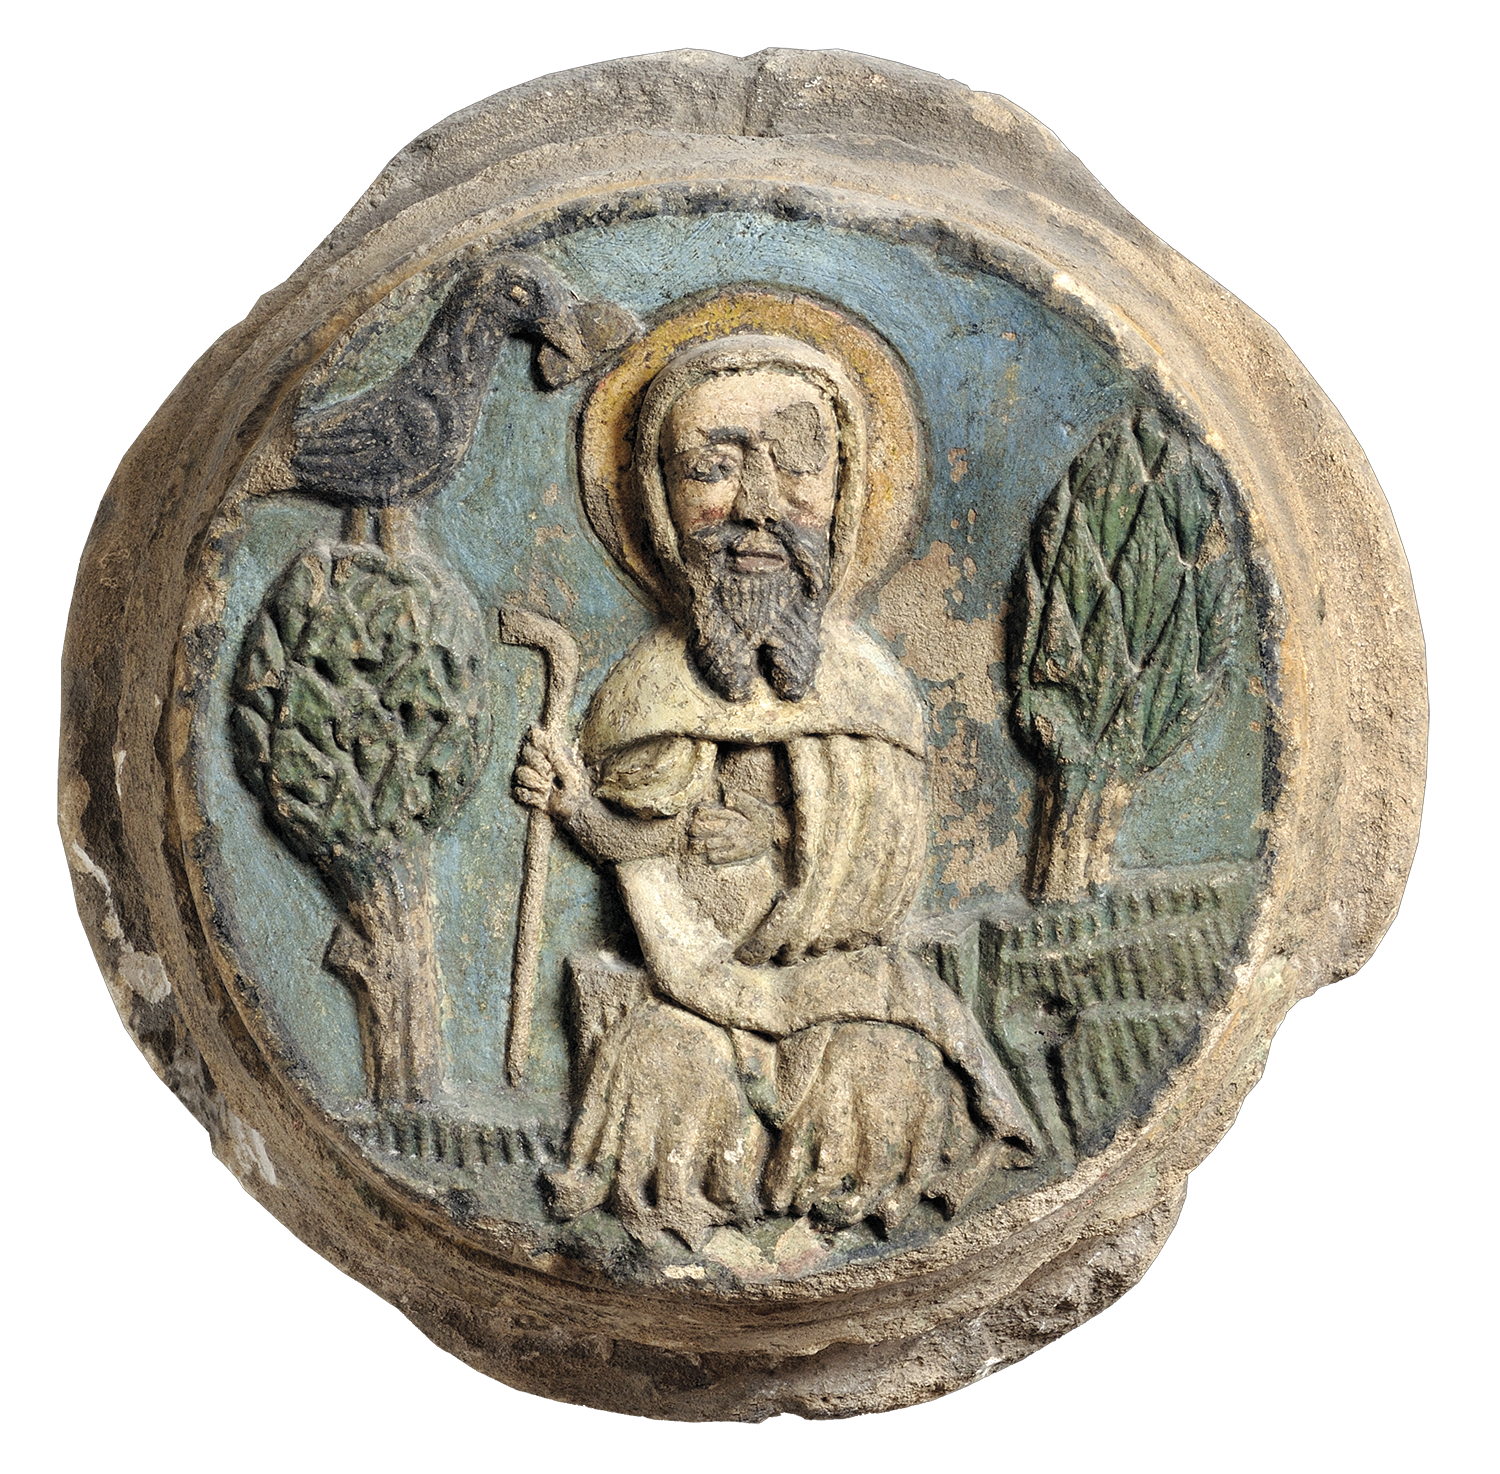 Vault keystone depicting Saint Paul the Hermit from the one-time Monastery of Budaszentlőrinc, 15th century, Budapest History Museum, Inv. no.: 368; photo: Bence Tihanyi